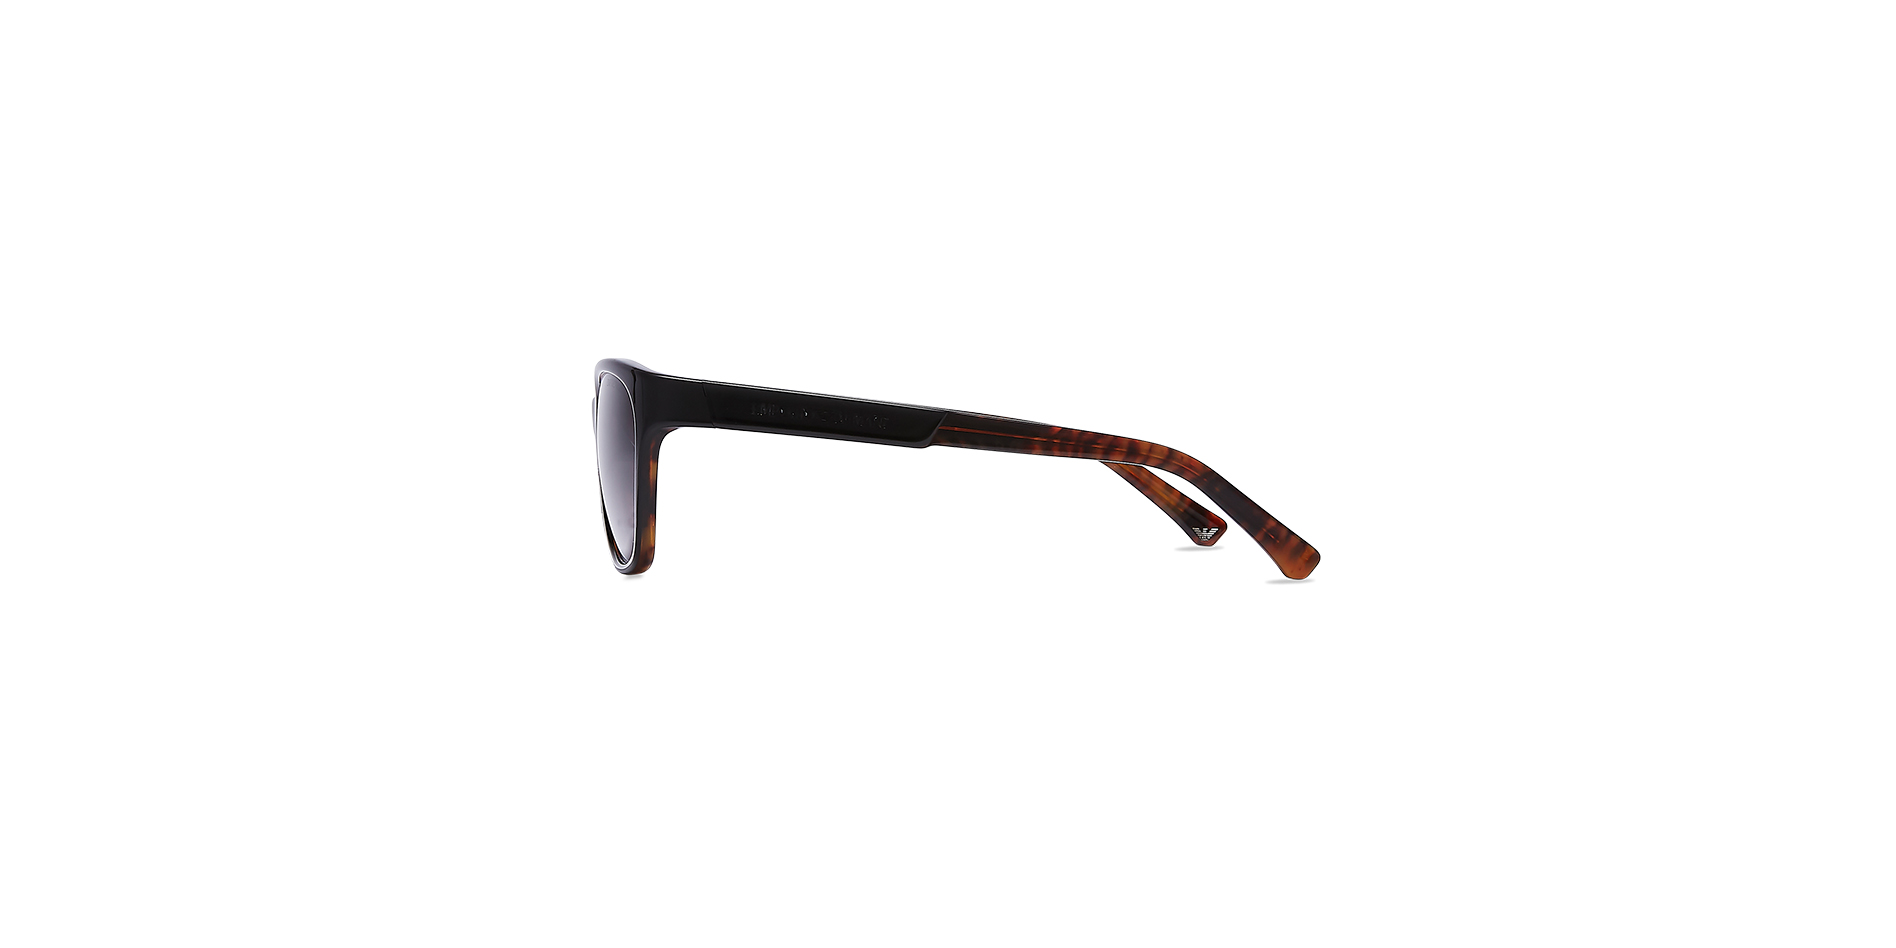 Modische Damen-Sonnenbrille aus Acetat, Emporio Armani, EA 4004